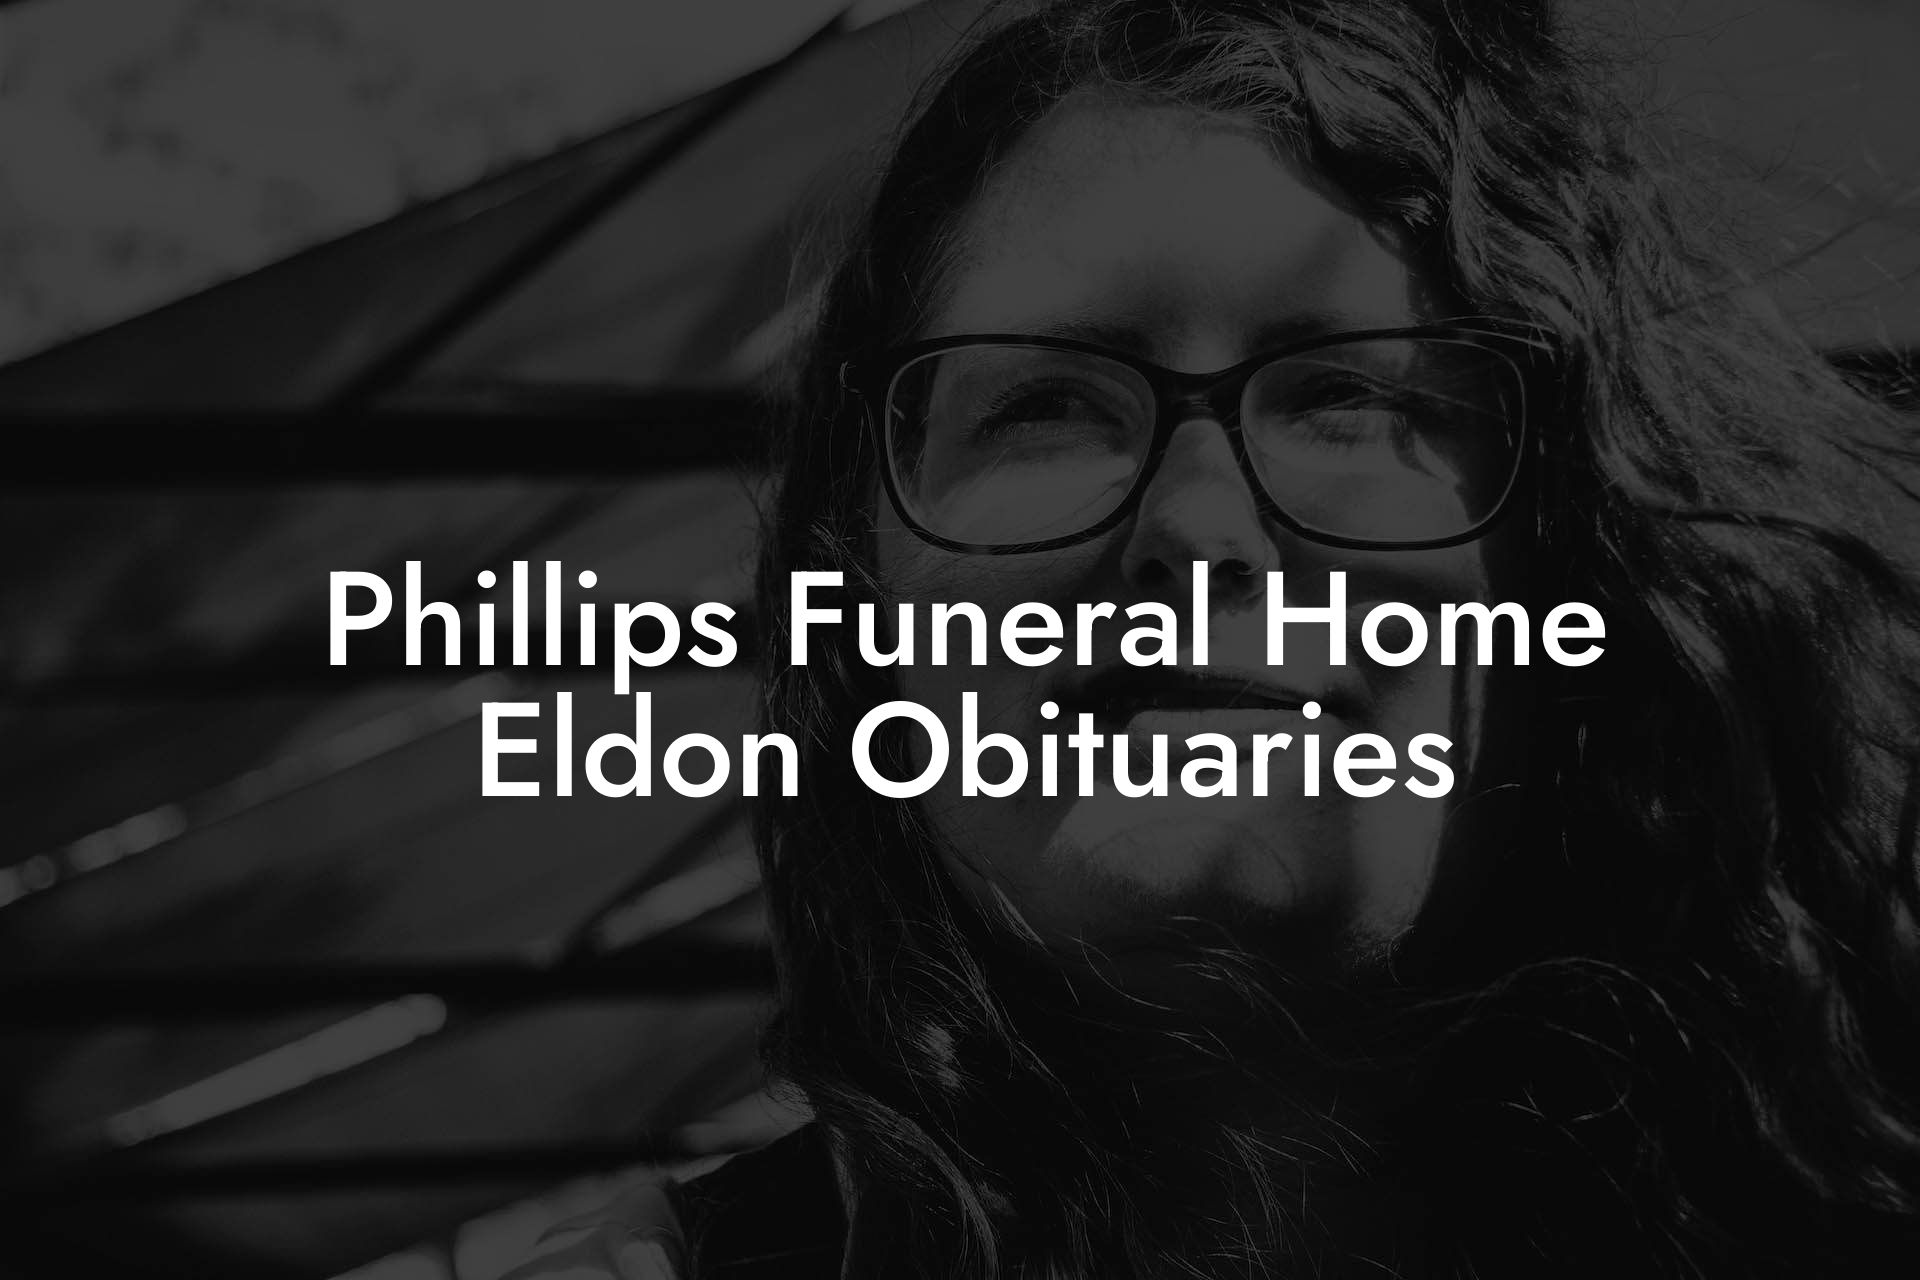 Phillips Funeral Home Eldon Obituaries